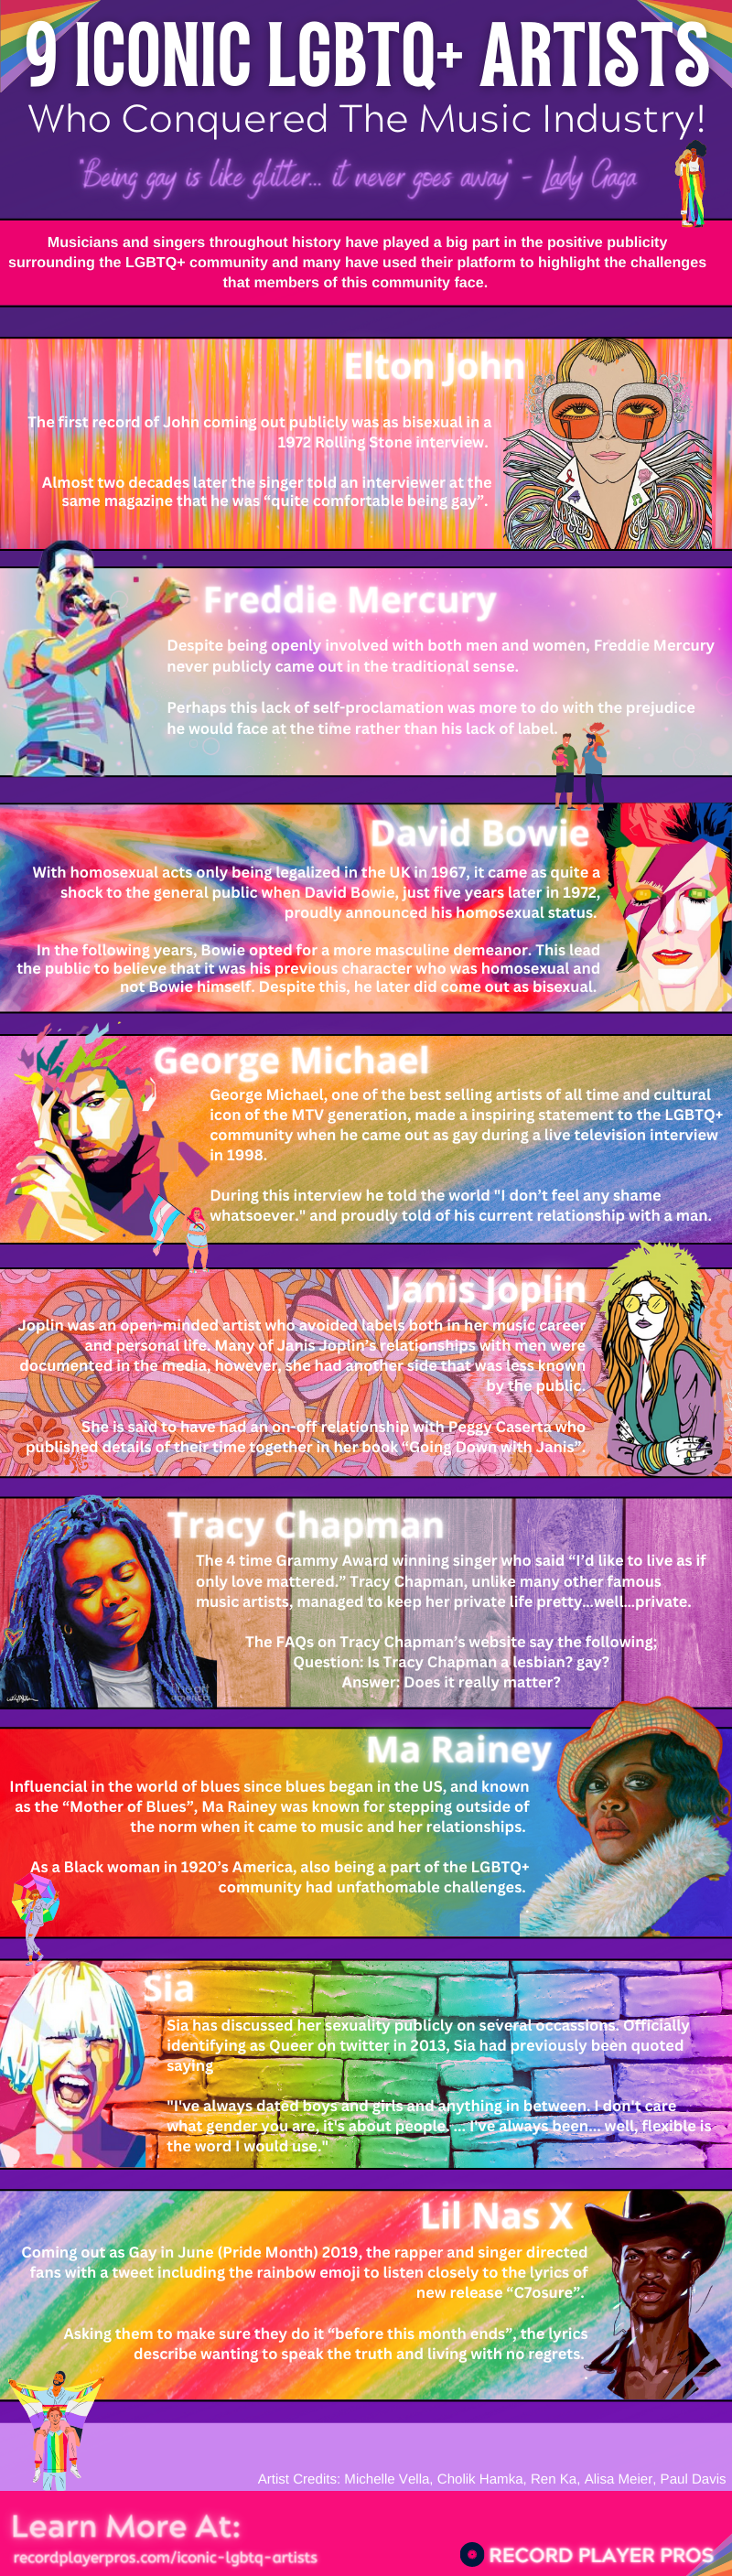 LGBTQ+ Music Industry Icons